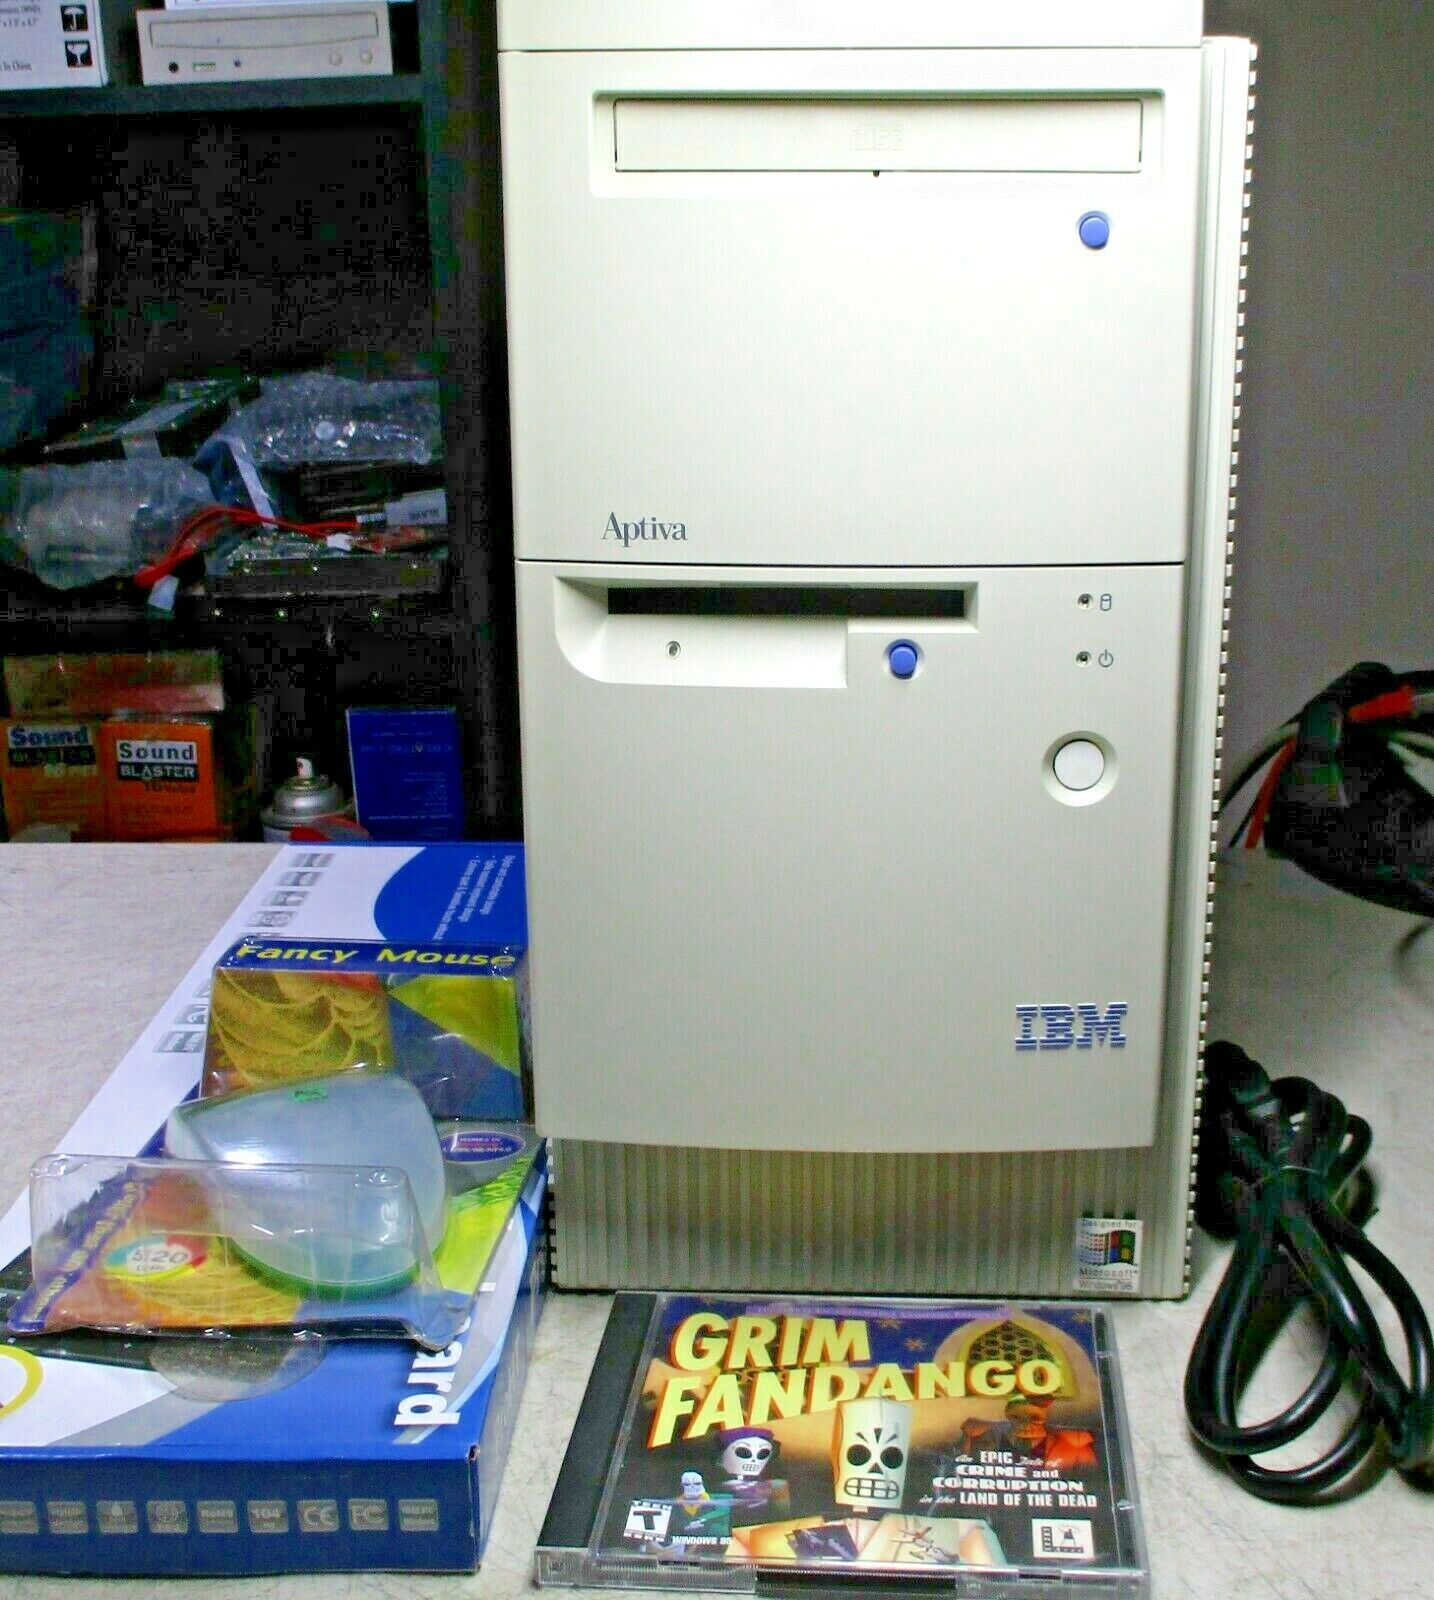 IBM Windows 98 95 DOS Gaming Computer 3.5FD CD Restore CDs PCI ISA Grim Fandango